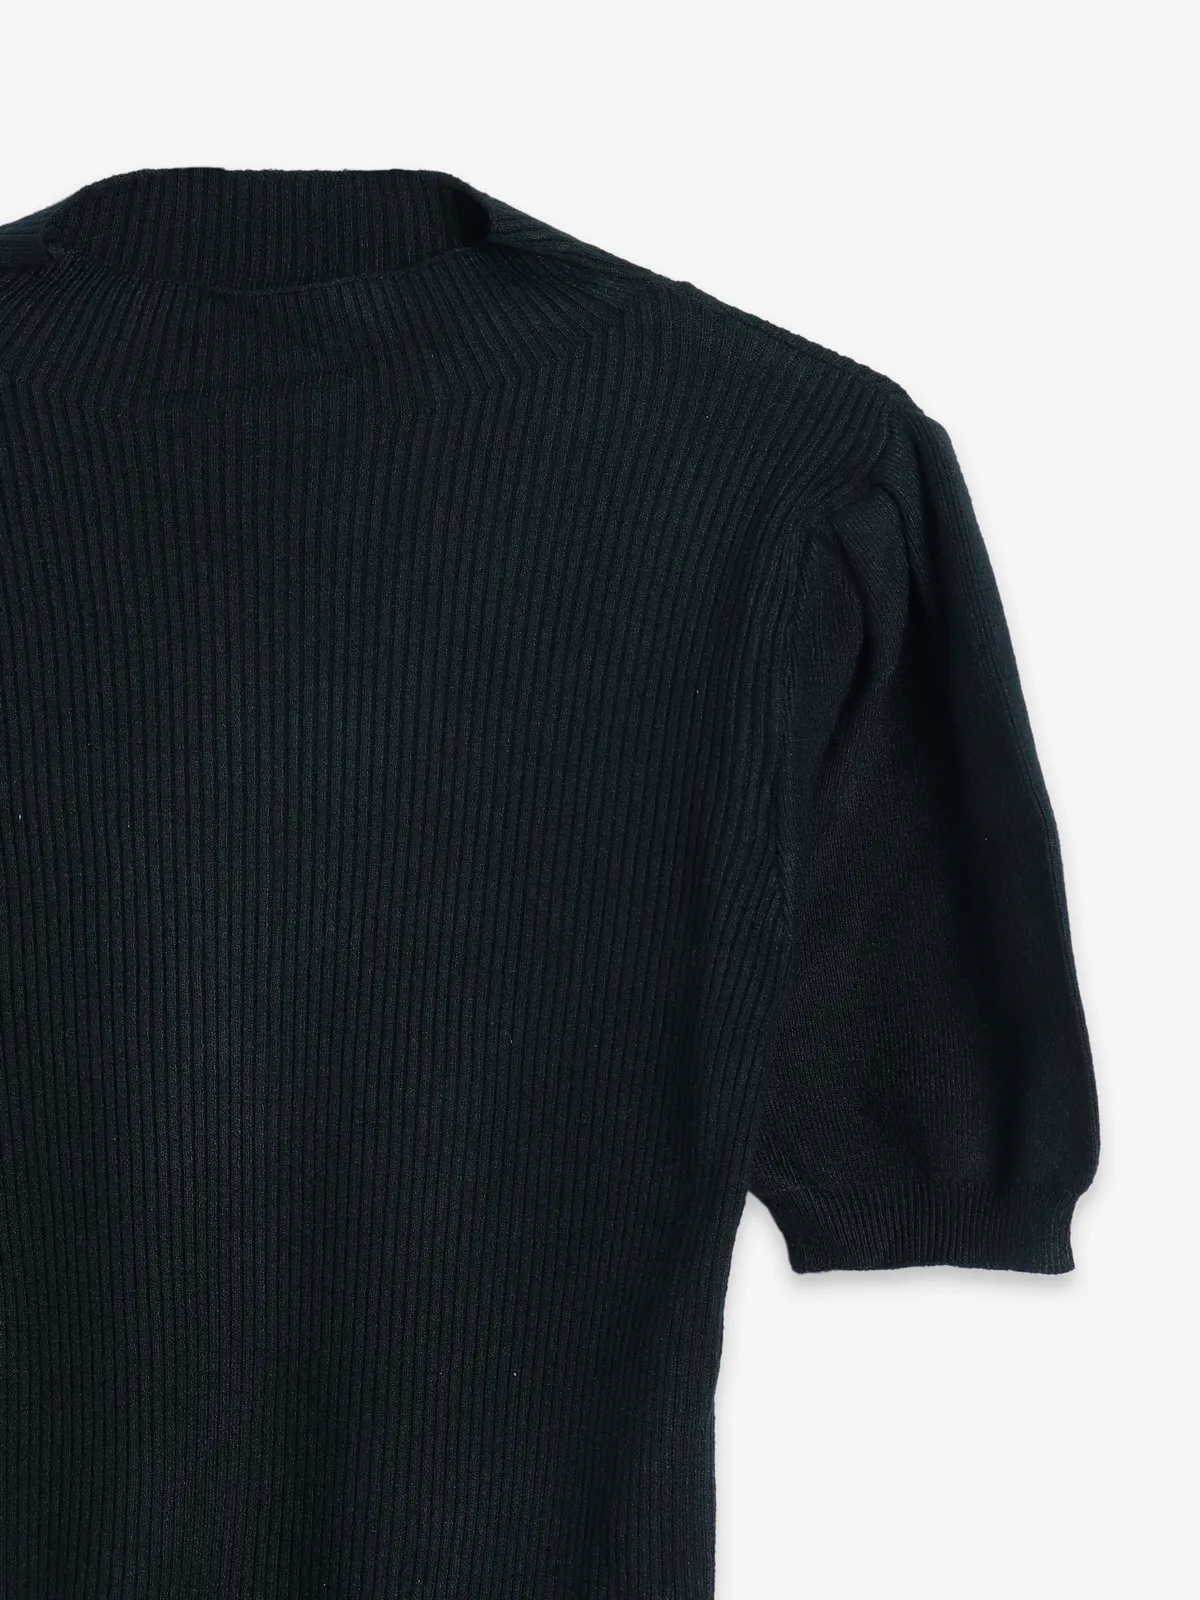 Sheczzar black knitted plain top